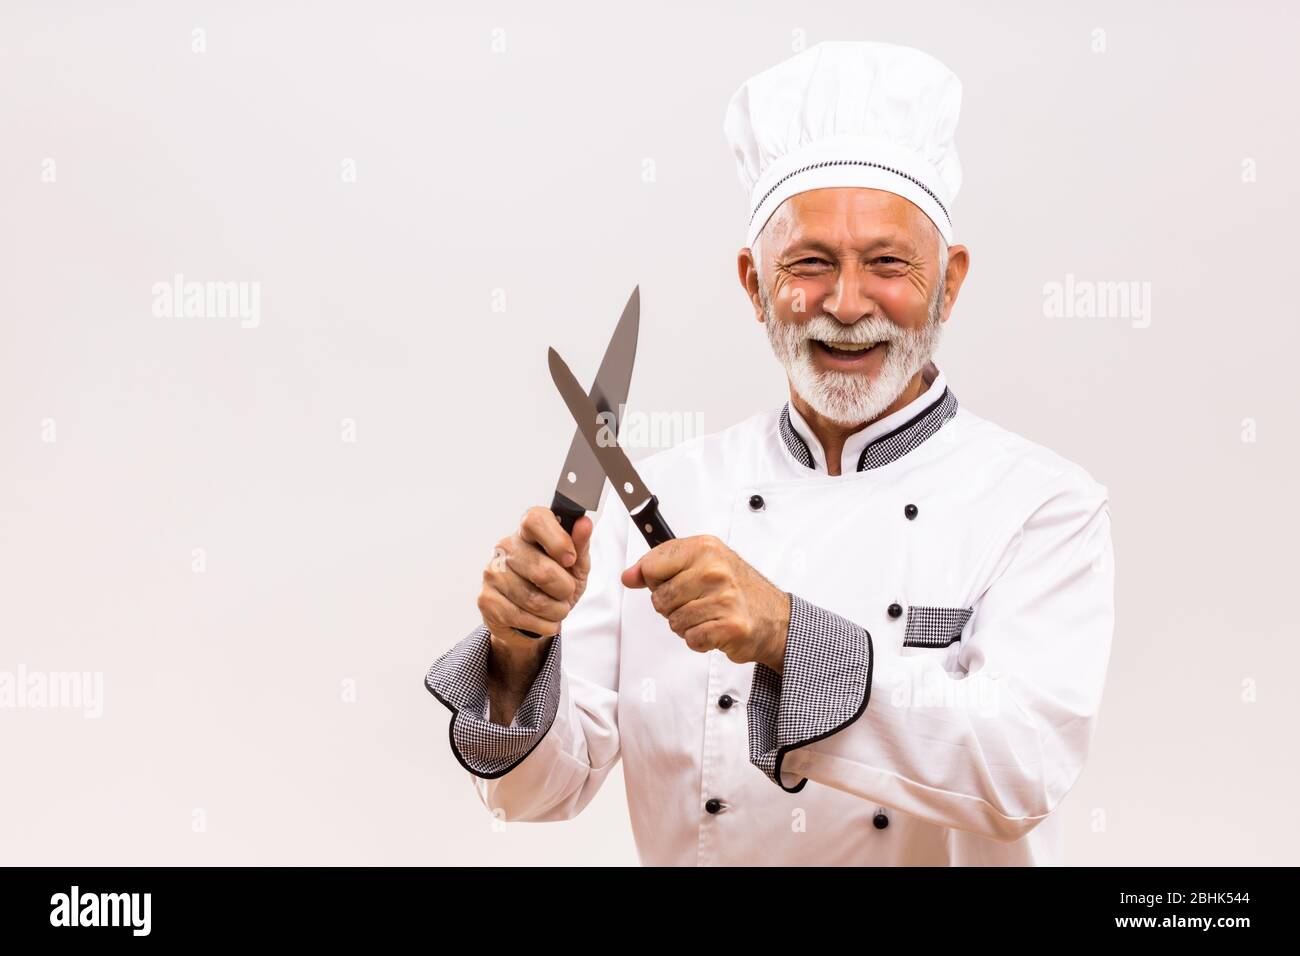 Imagen de chef feliz afila cuchillos sobre fondo gris. Foto de stock